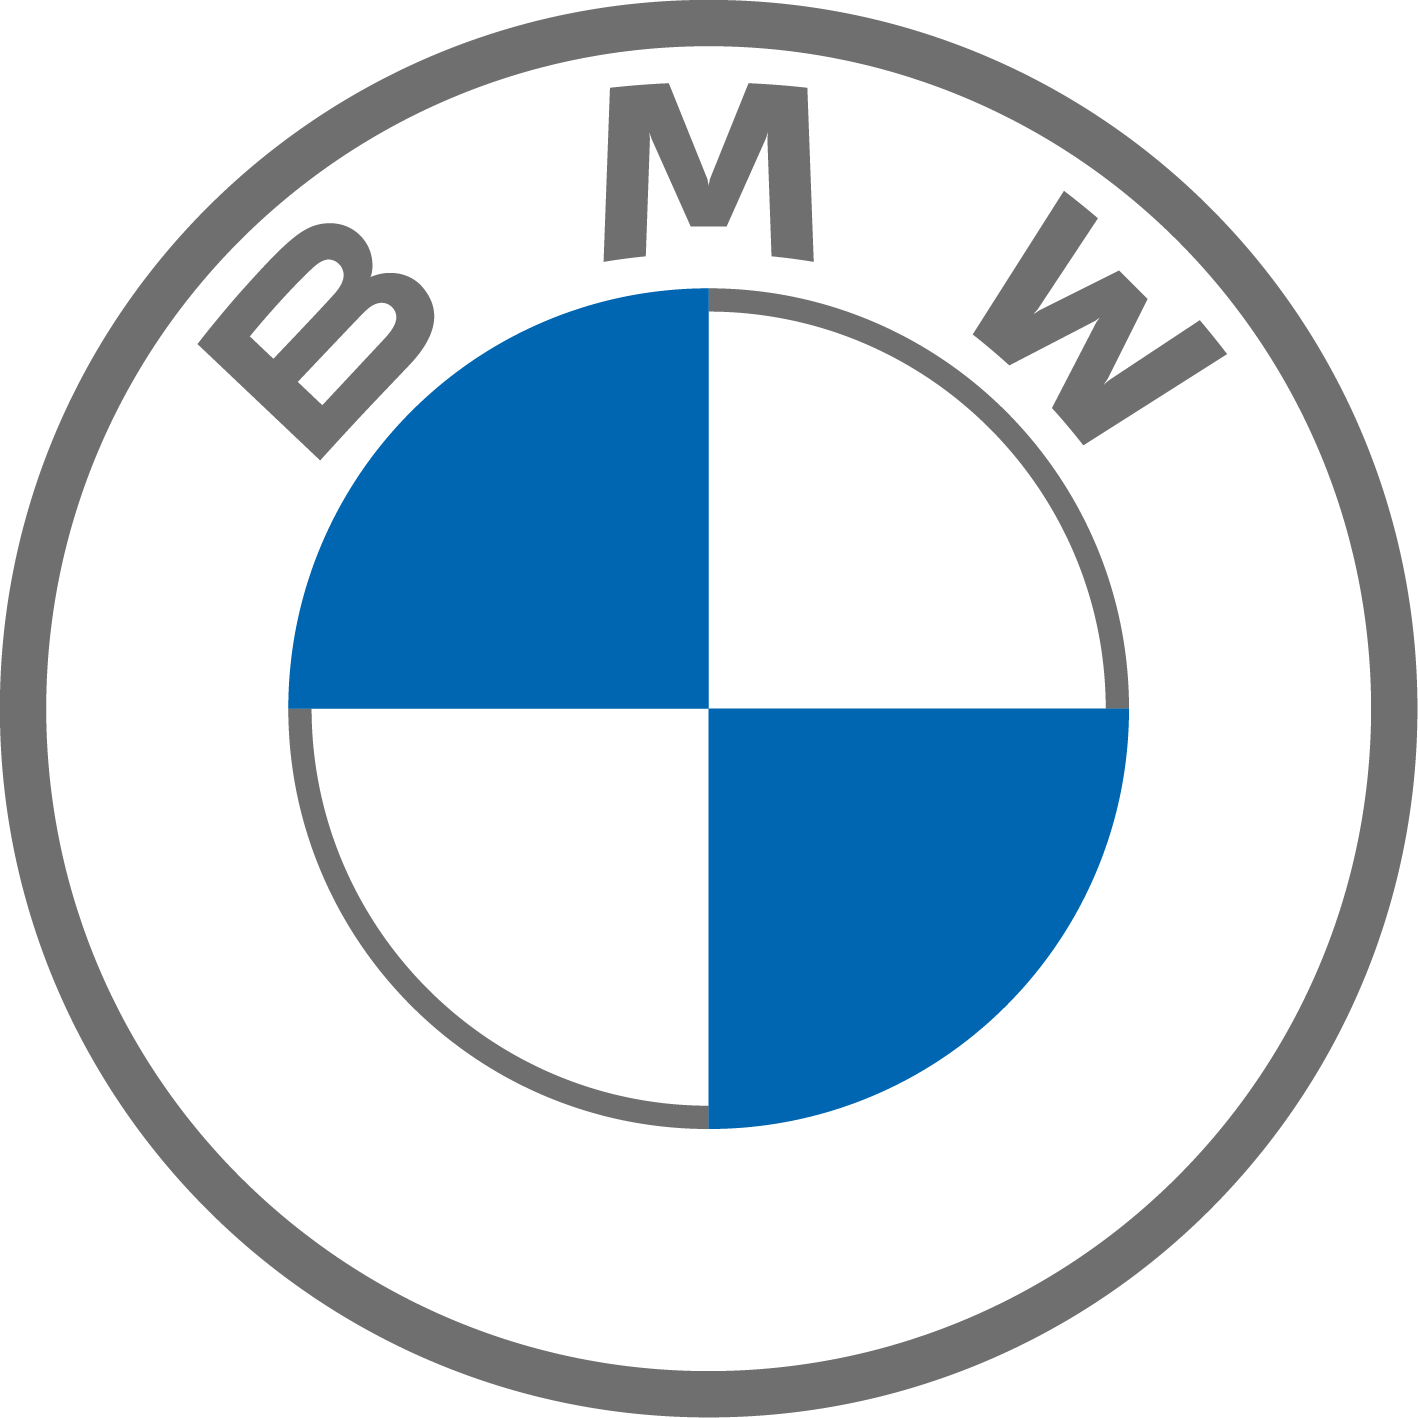 BMW and Holmatro